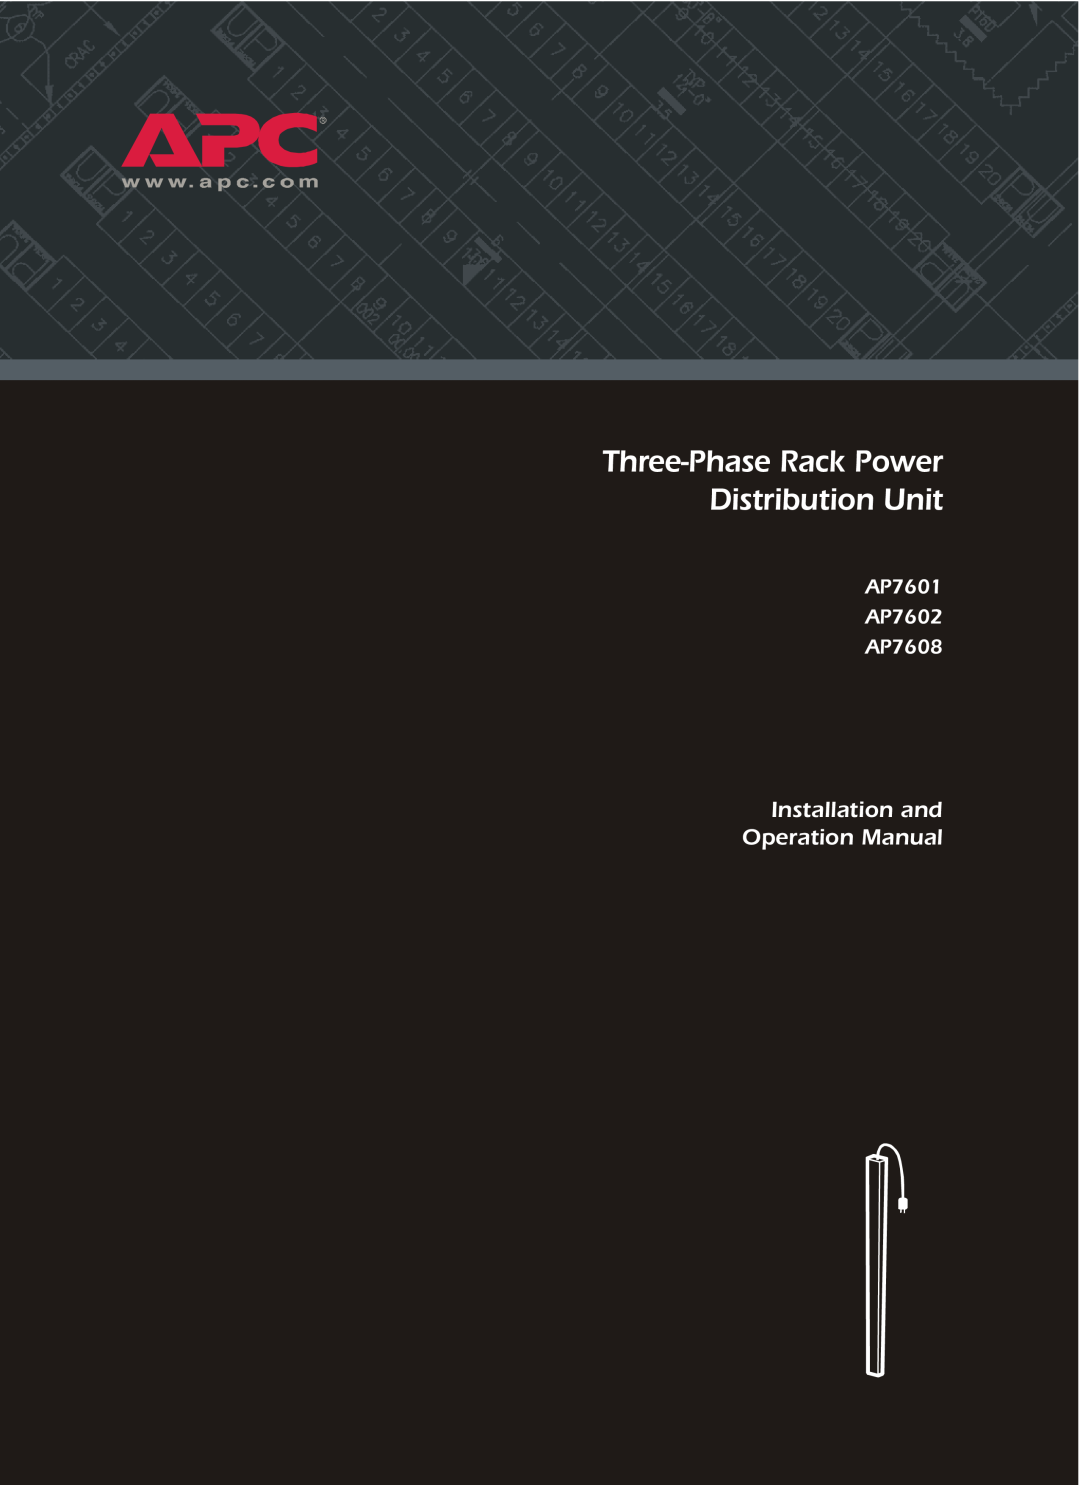 American Power Conversion operation manual Three-Phase Rack Power Distribution Unit, AP7601 AP7602 AP7608 